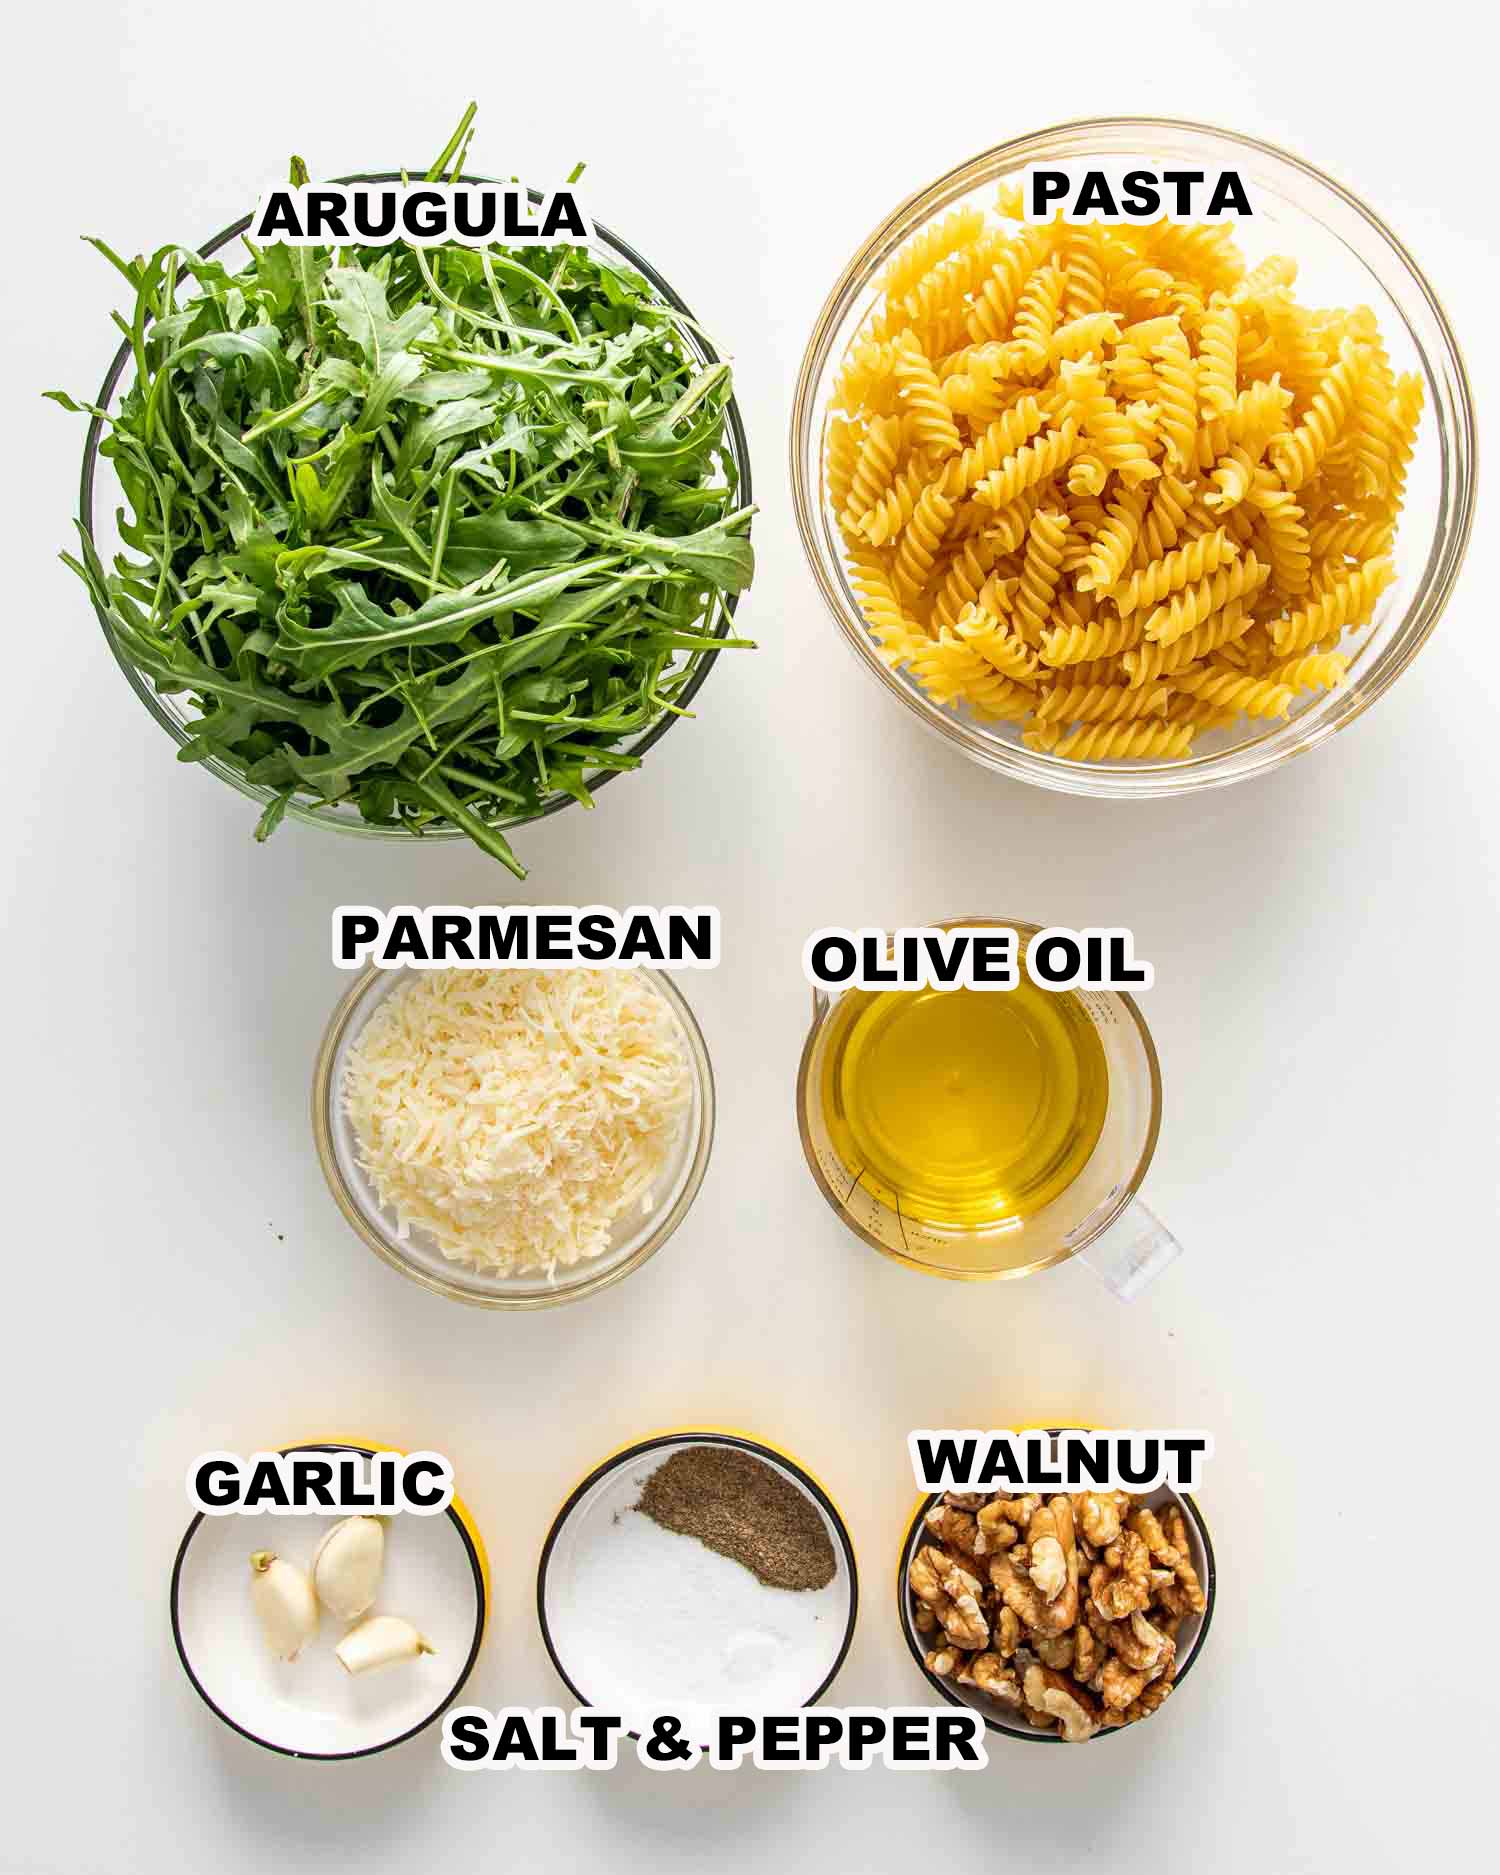 ingredients needed to make arugula walnut pesto pasta.